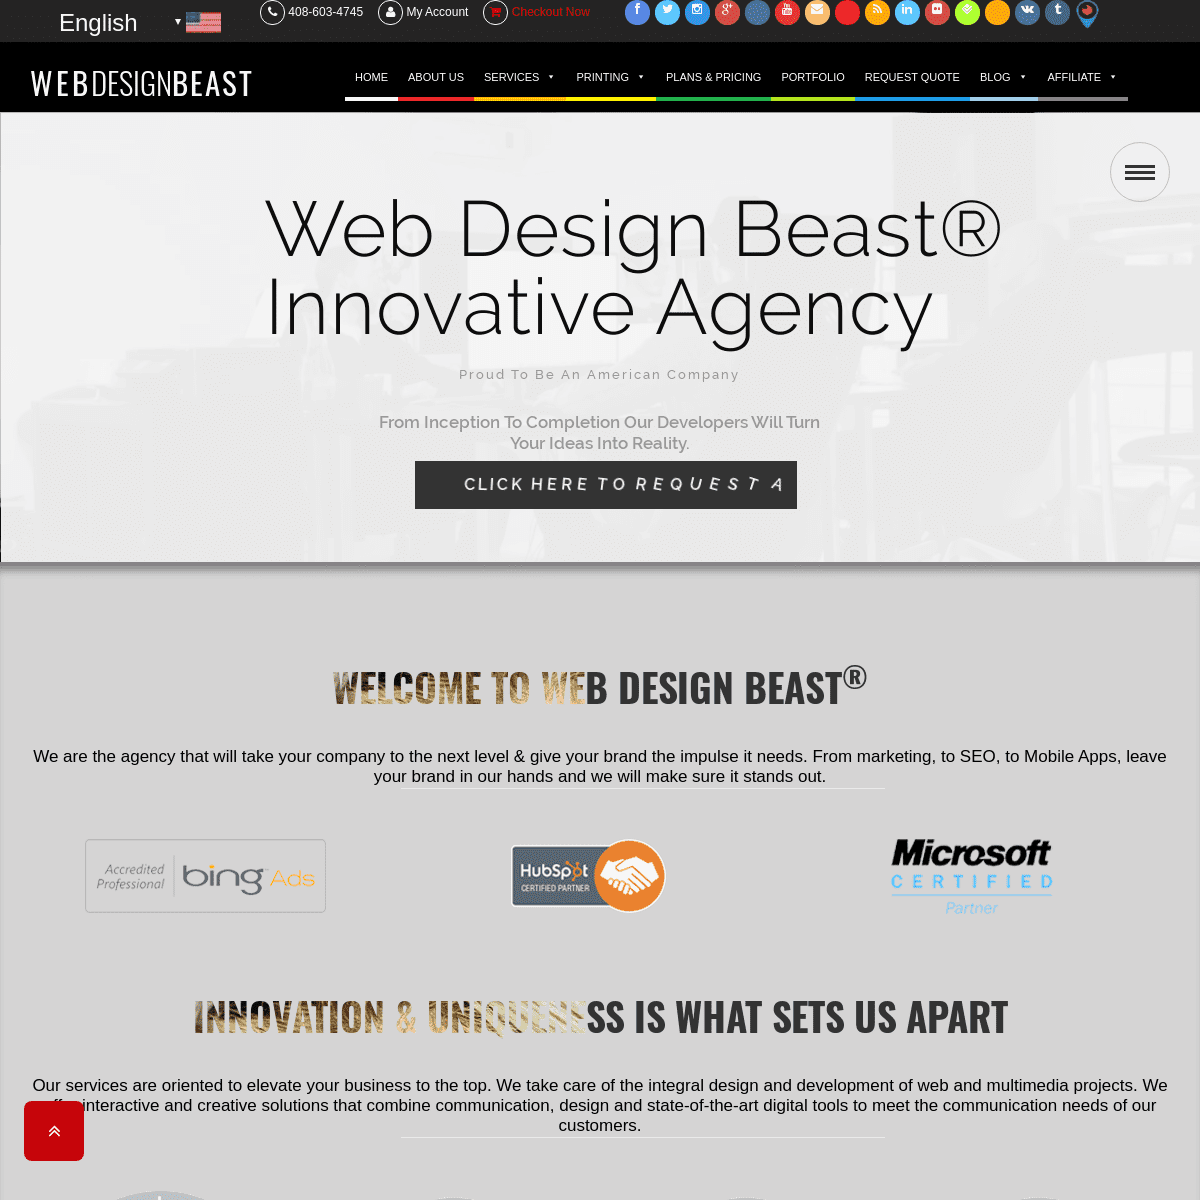 A complete backup of webdesignbeast.com